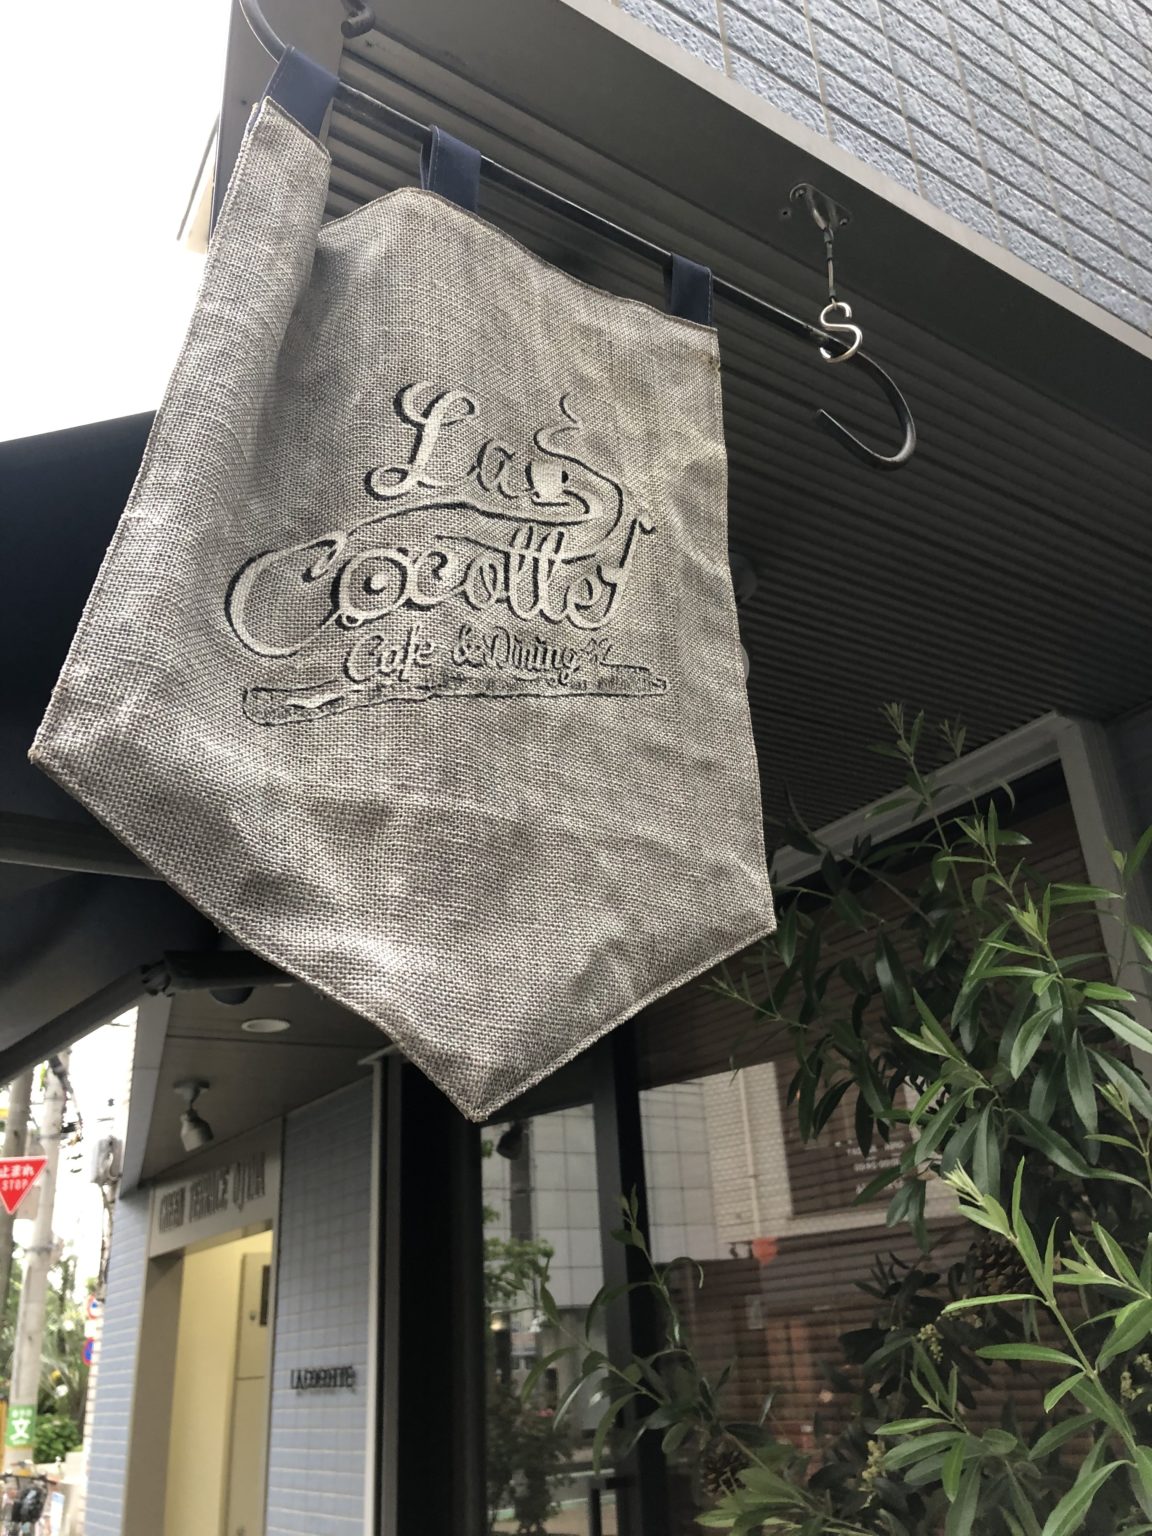 Cafe&dining La Cocotte